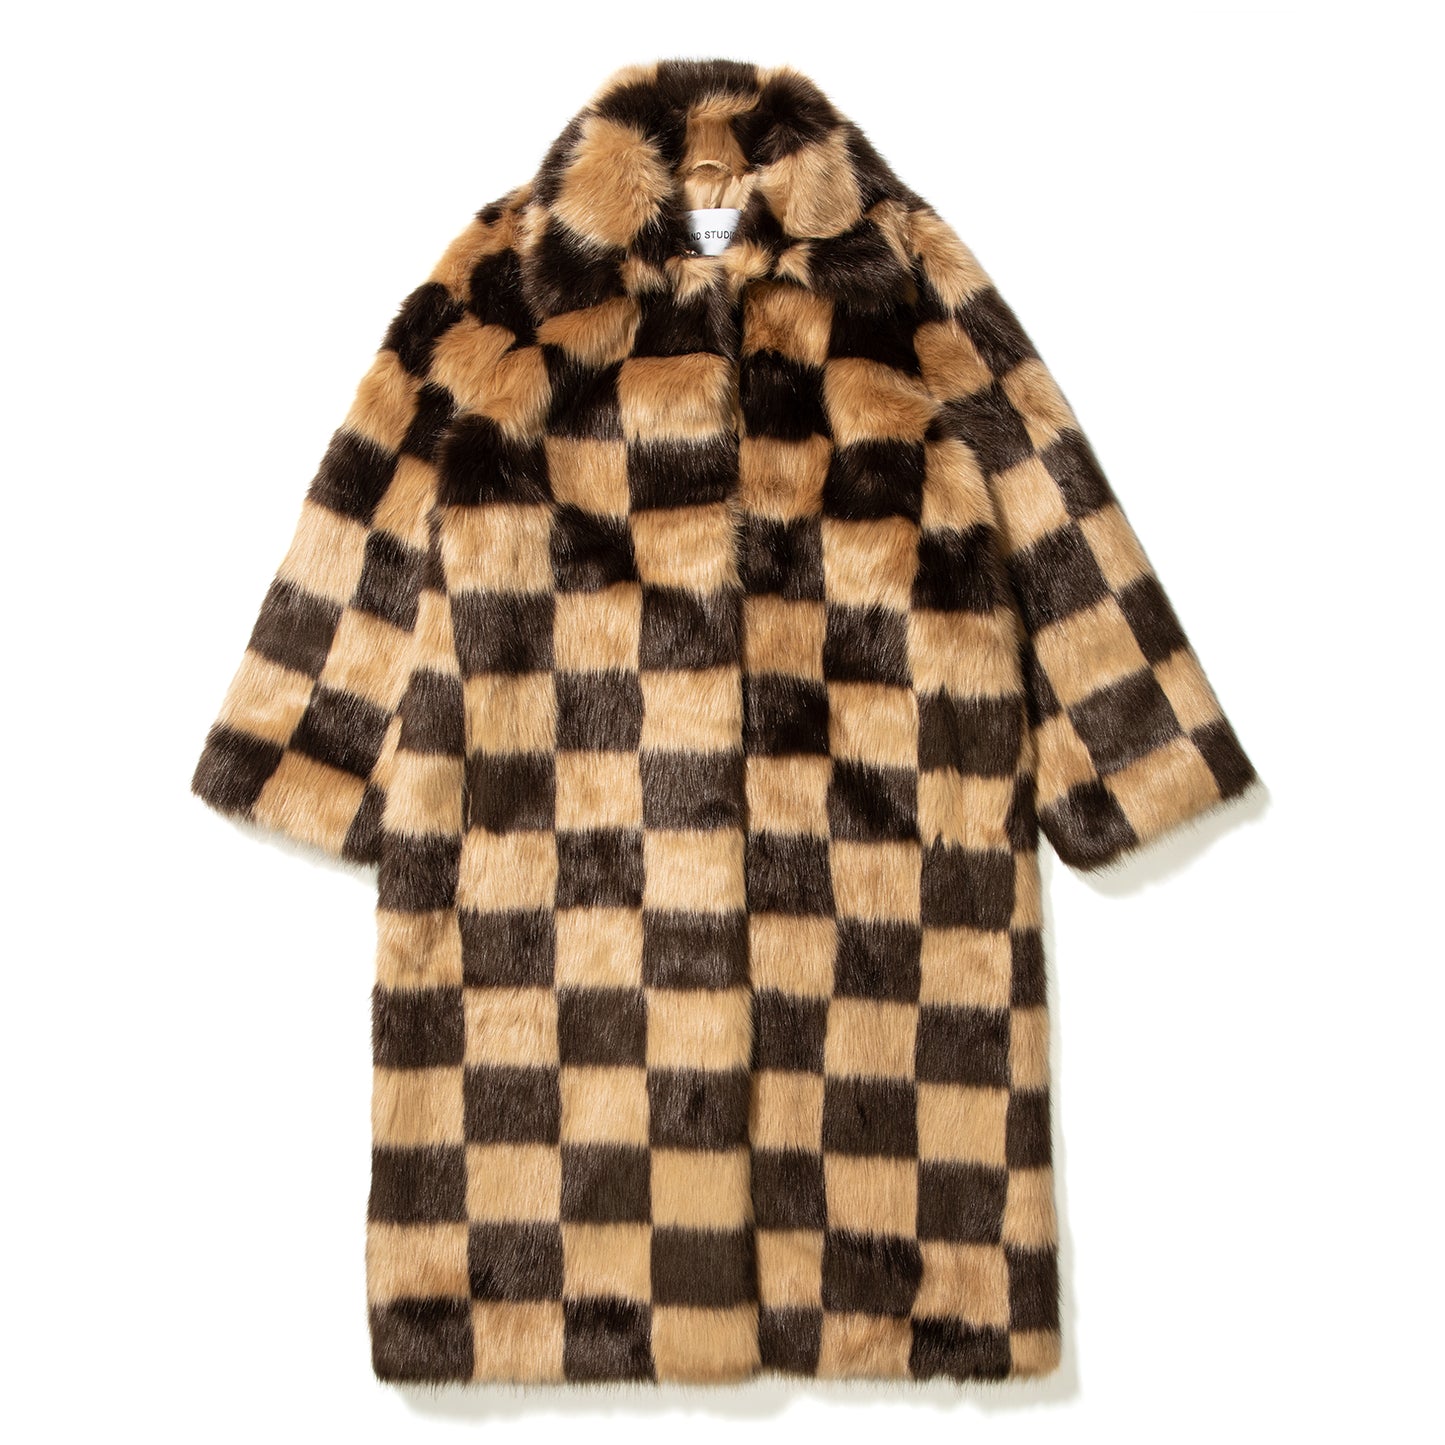 Stand Studio Nino Checkerboard Long Coat (Beige/Brown Check)